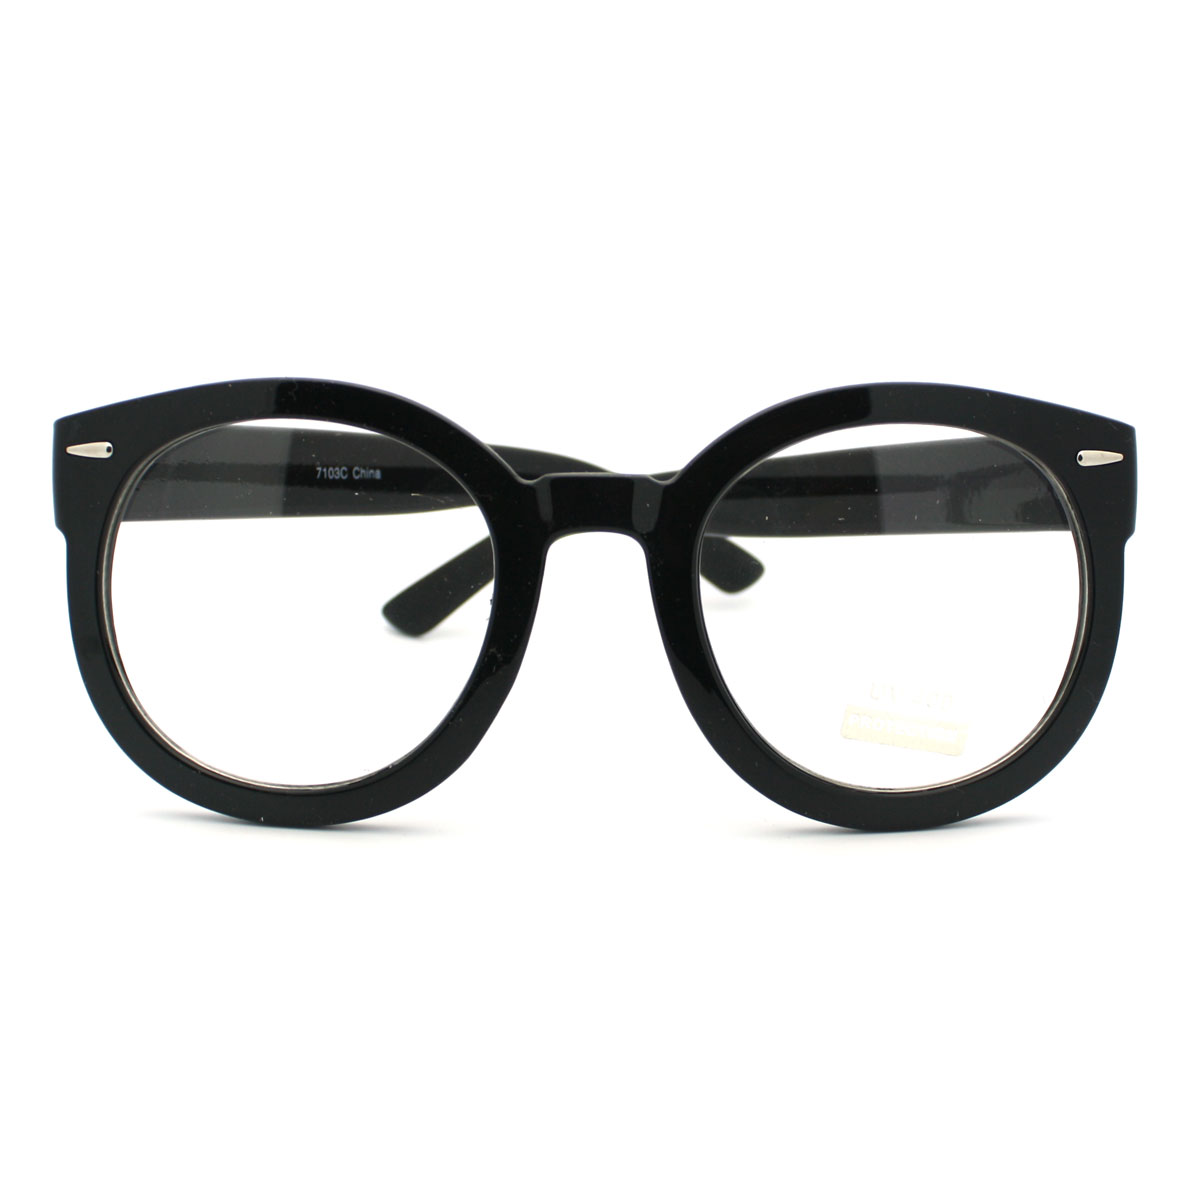 Oversized Round Thick Horn Rim Clear Lens Fashion Eye Glasses Frame Black - image 1 of 3